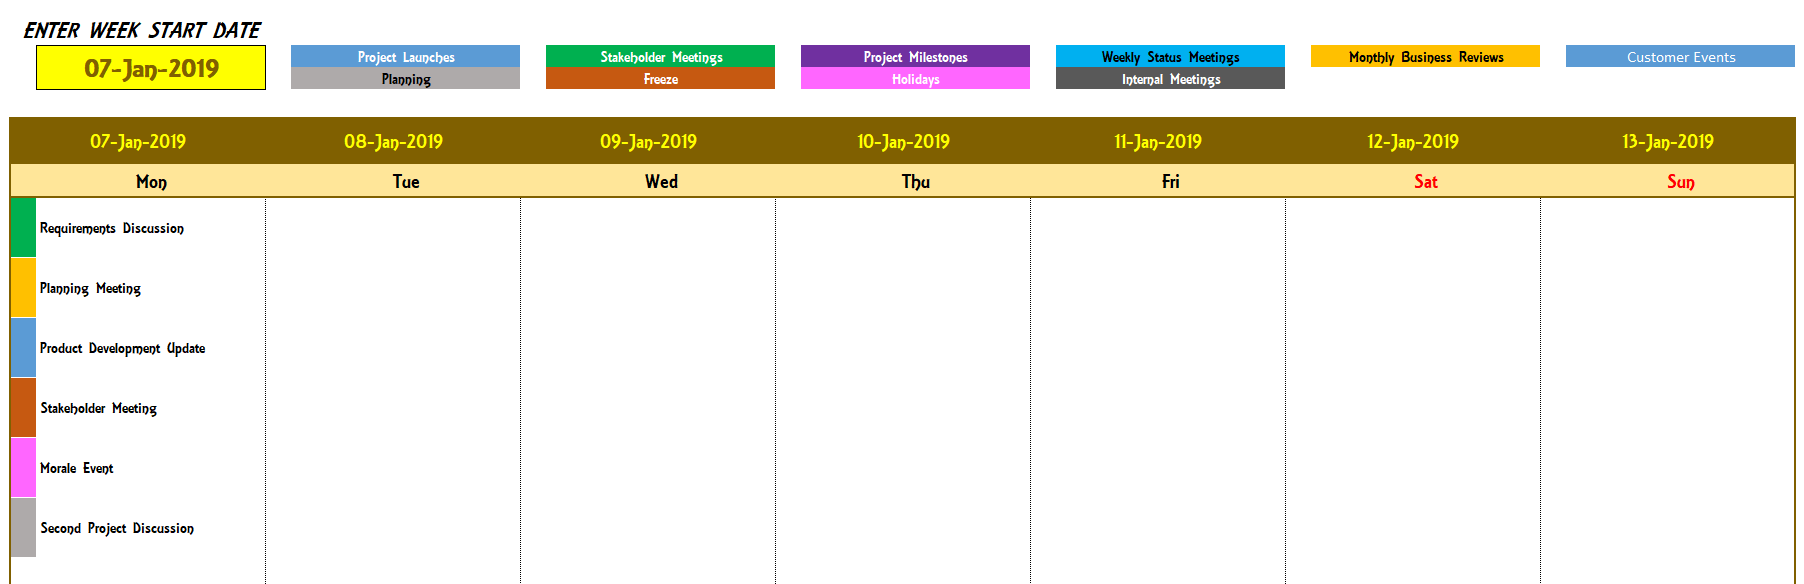 Events Calendar Template from indzara.com